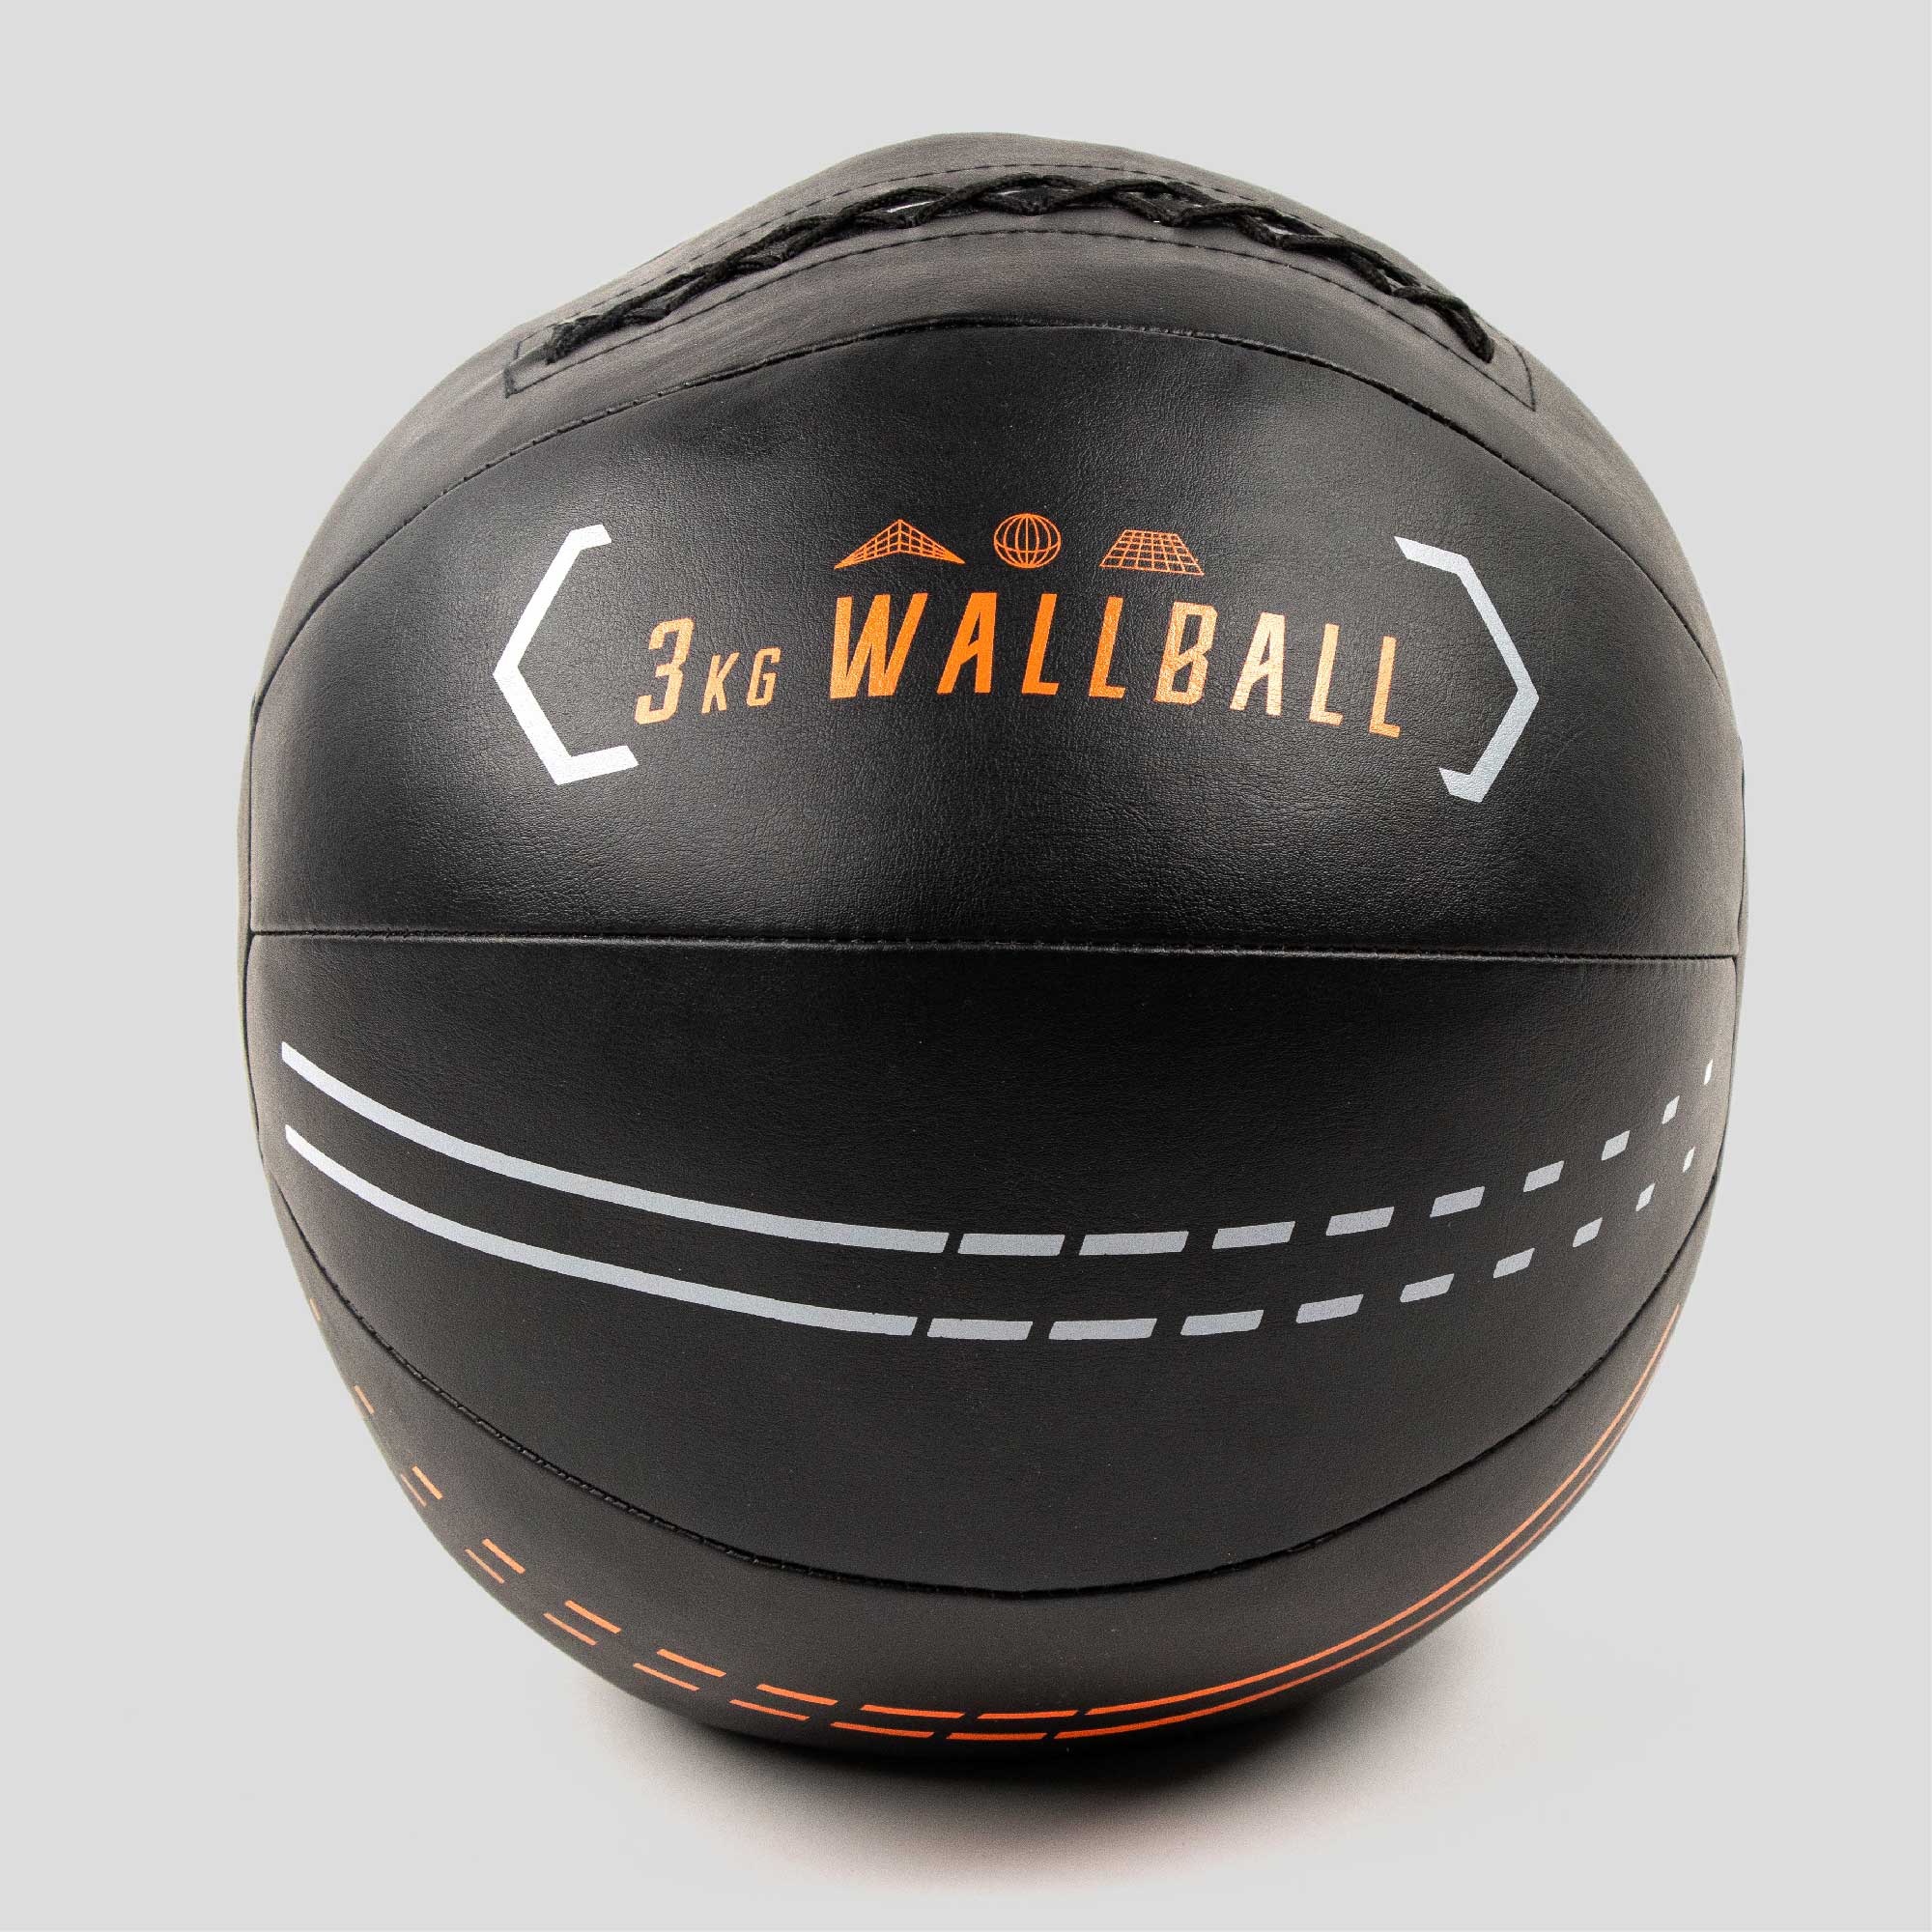 Wall Ball - 3kg